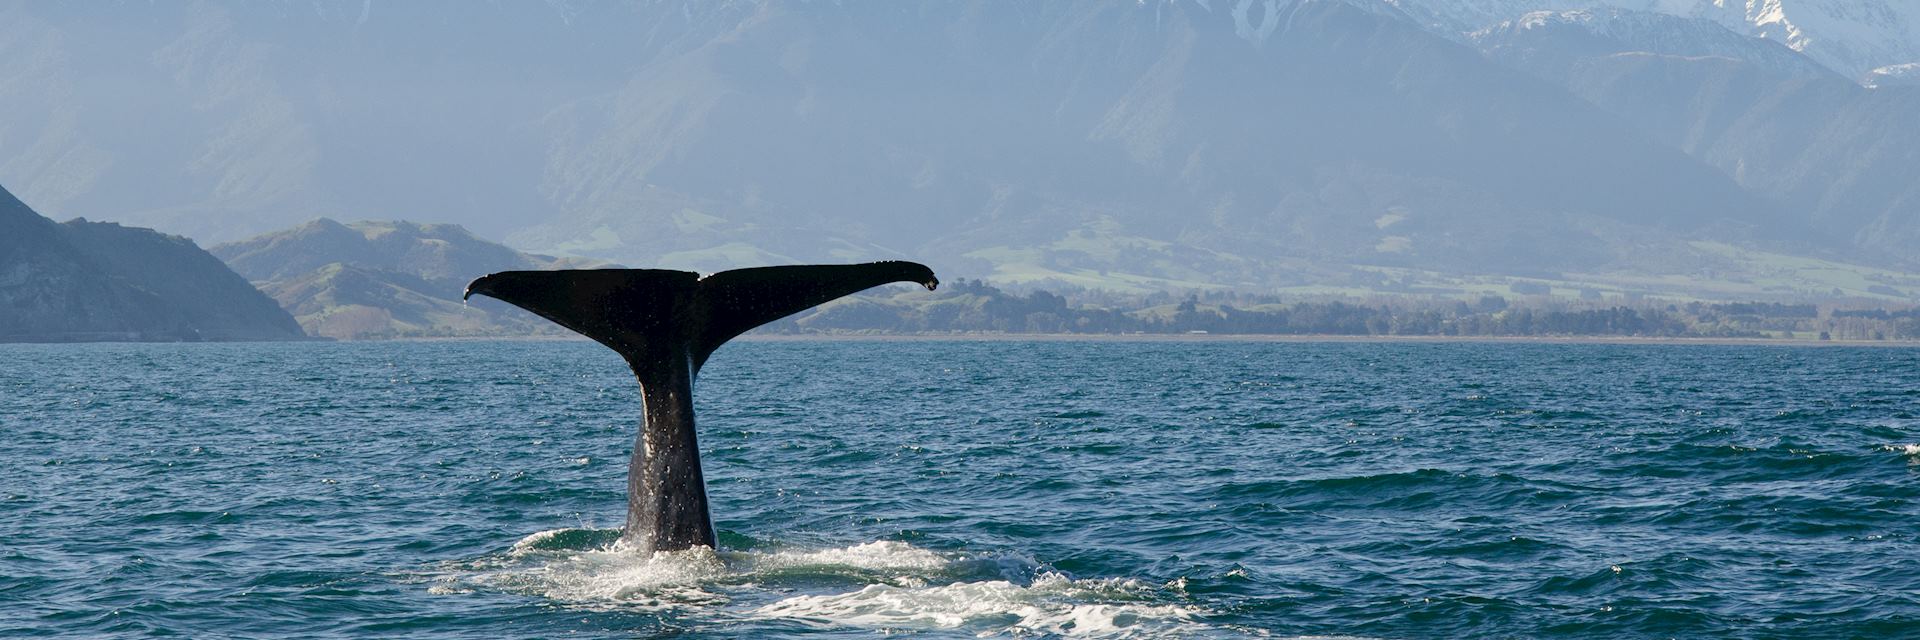 Whale in Kaikoura, New Zealand